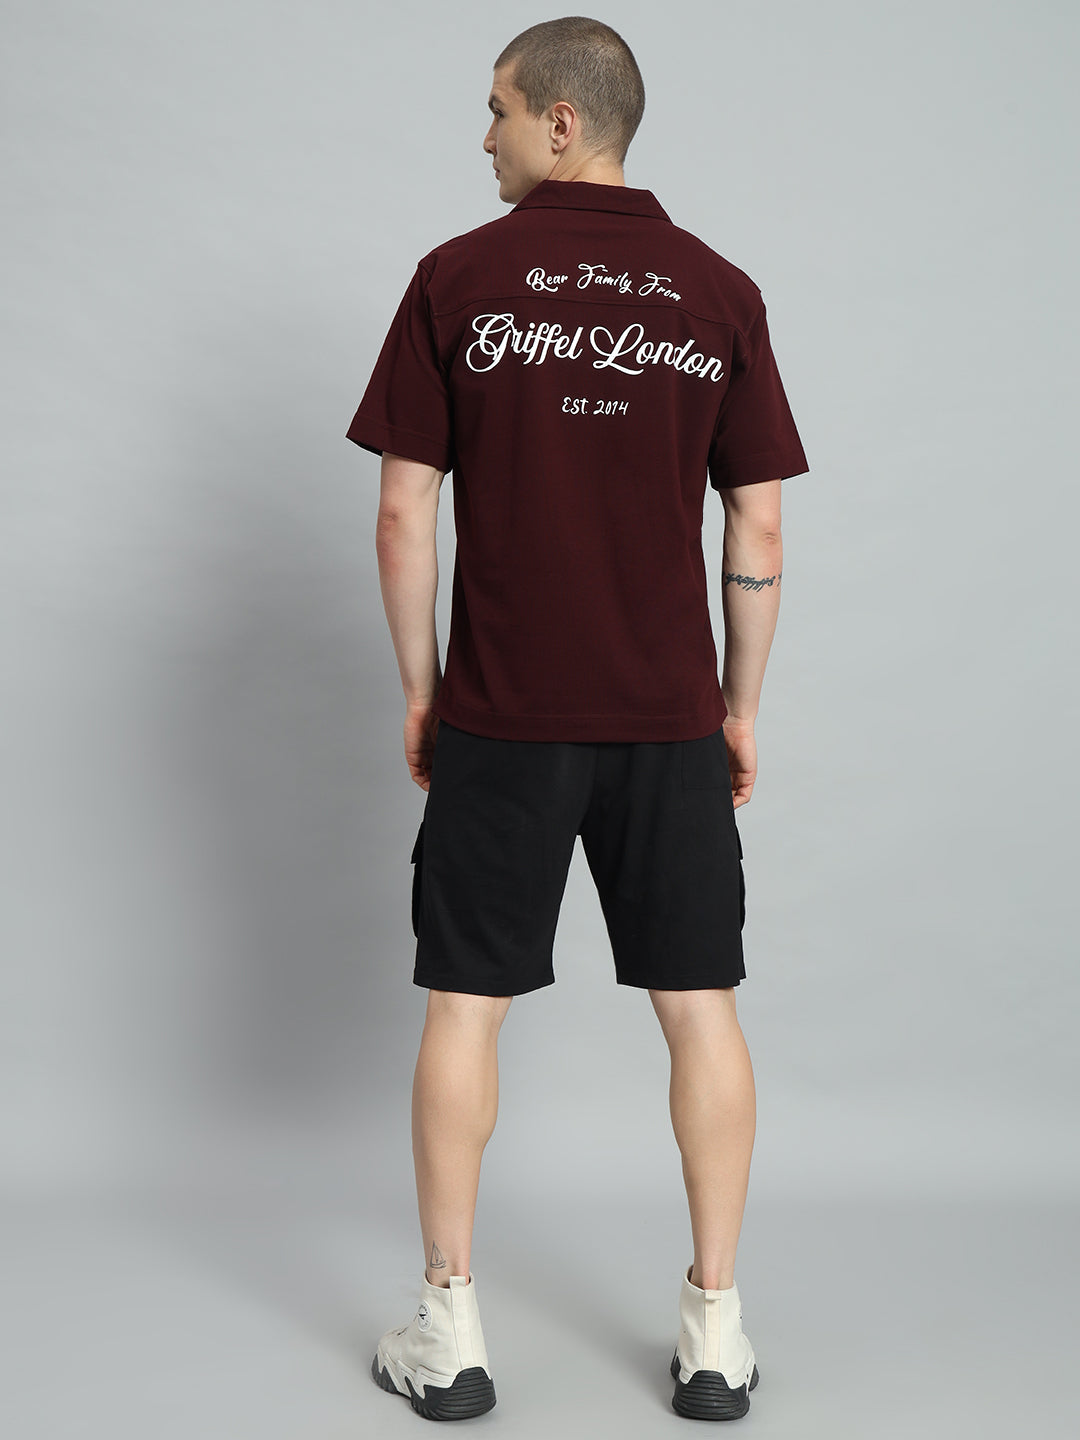 GRIFFEL Bowling Shirt and Shorts Set